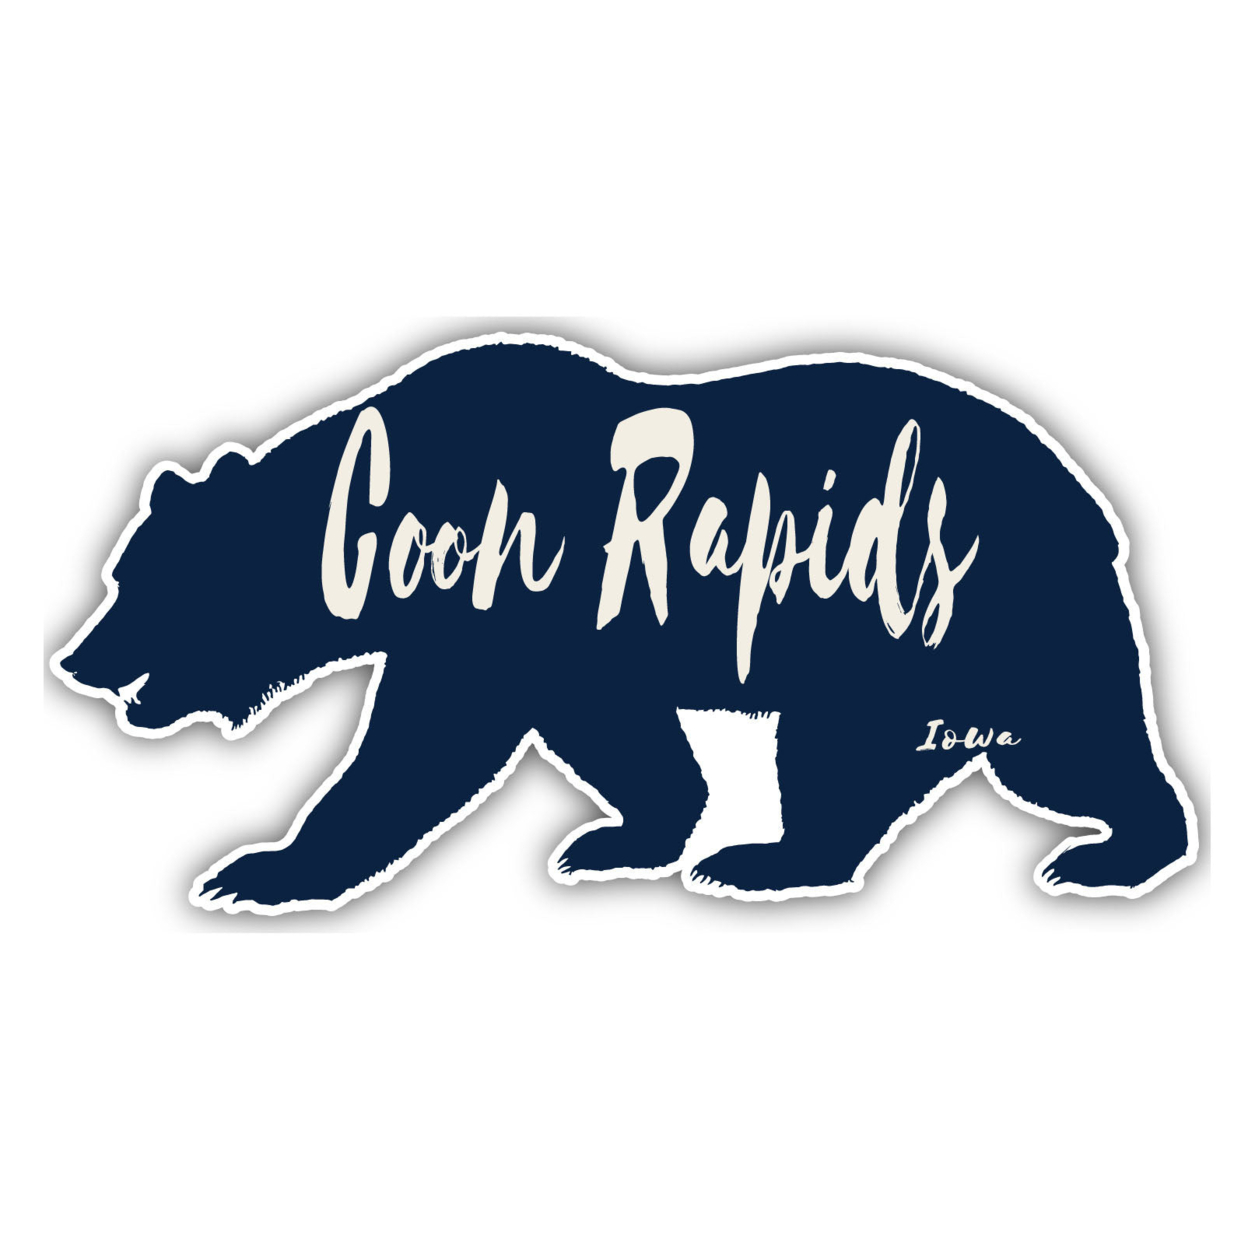 Coon Rapids Iowa Souvenir Decorative Stickers (Choose Theme And Size) - Single Unit, 6-Inch, Bear